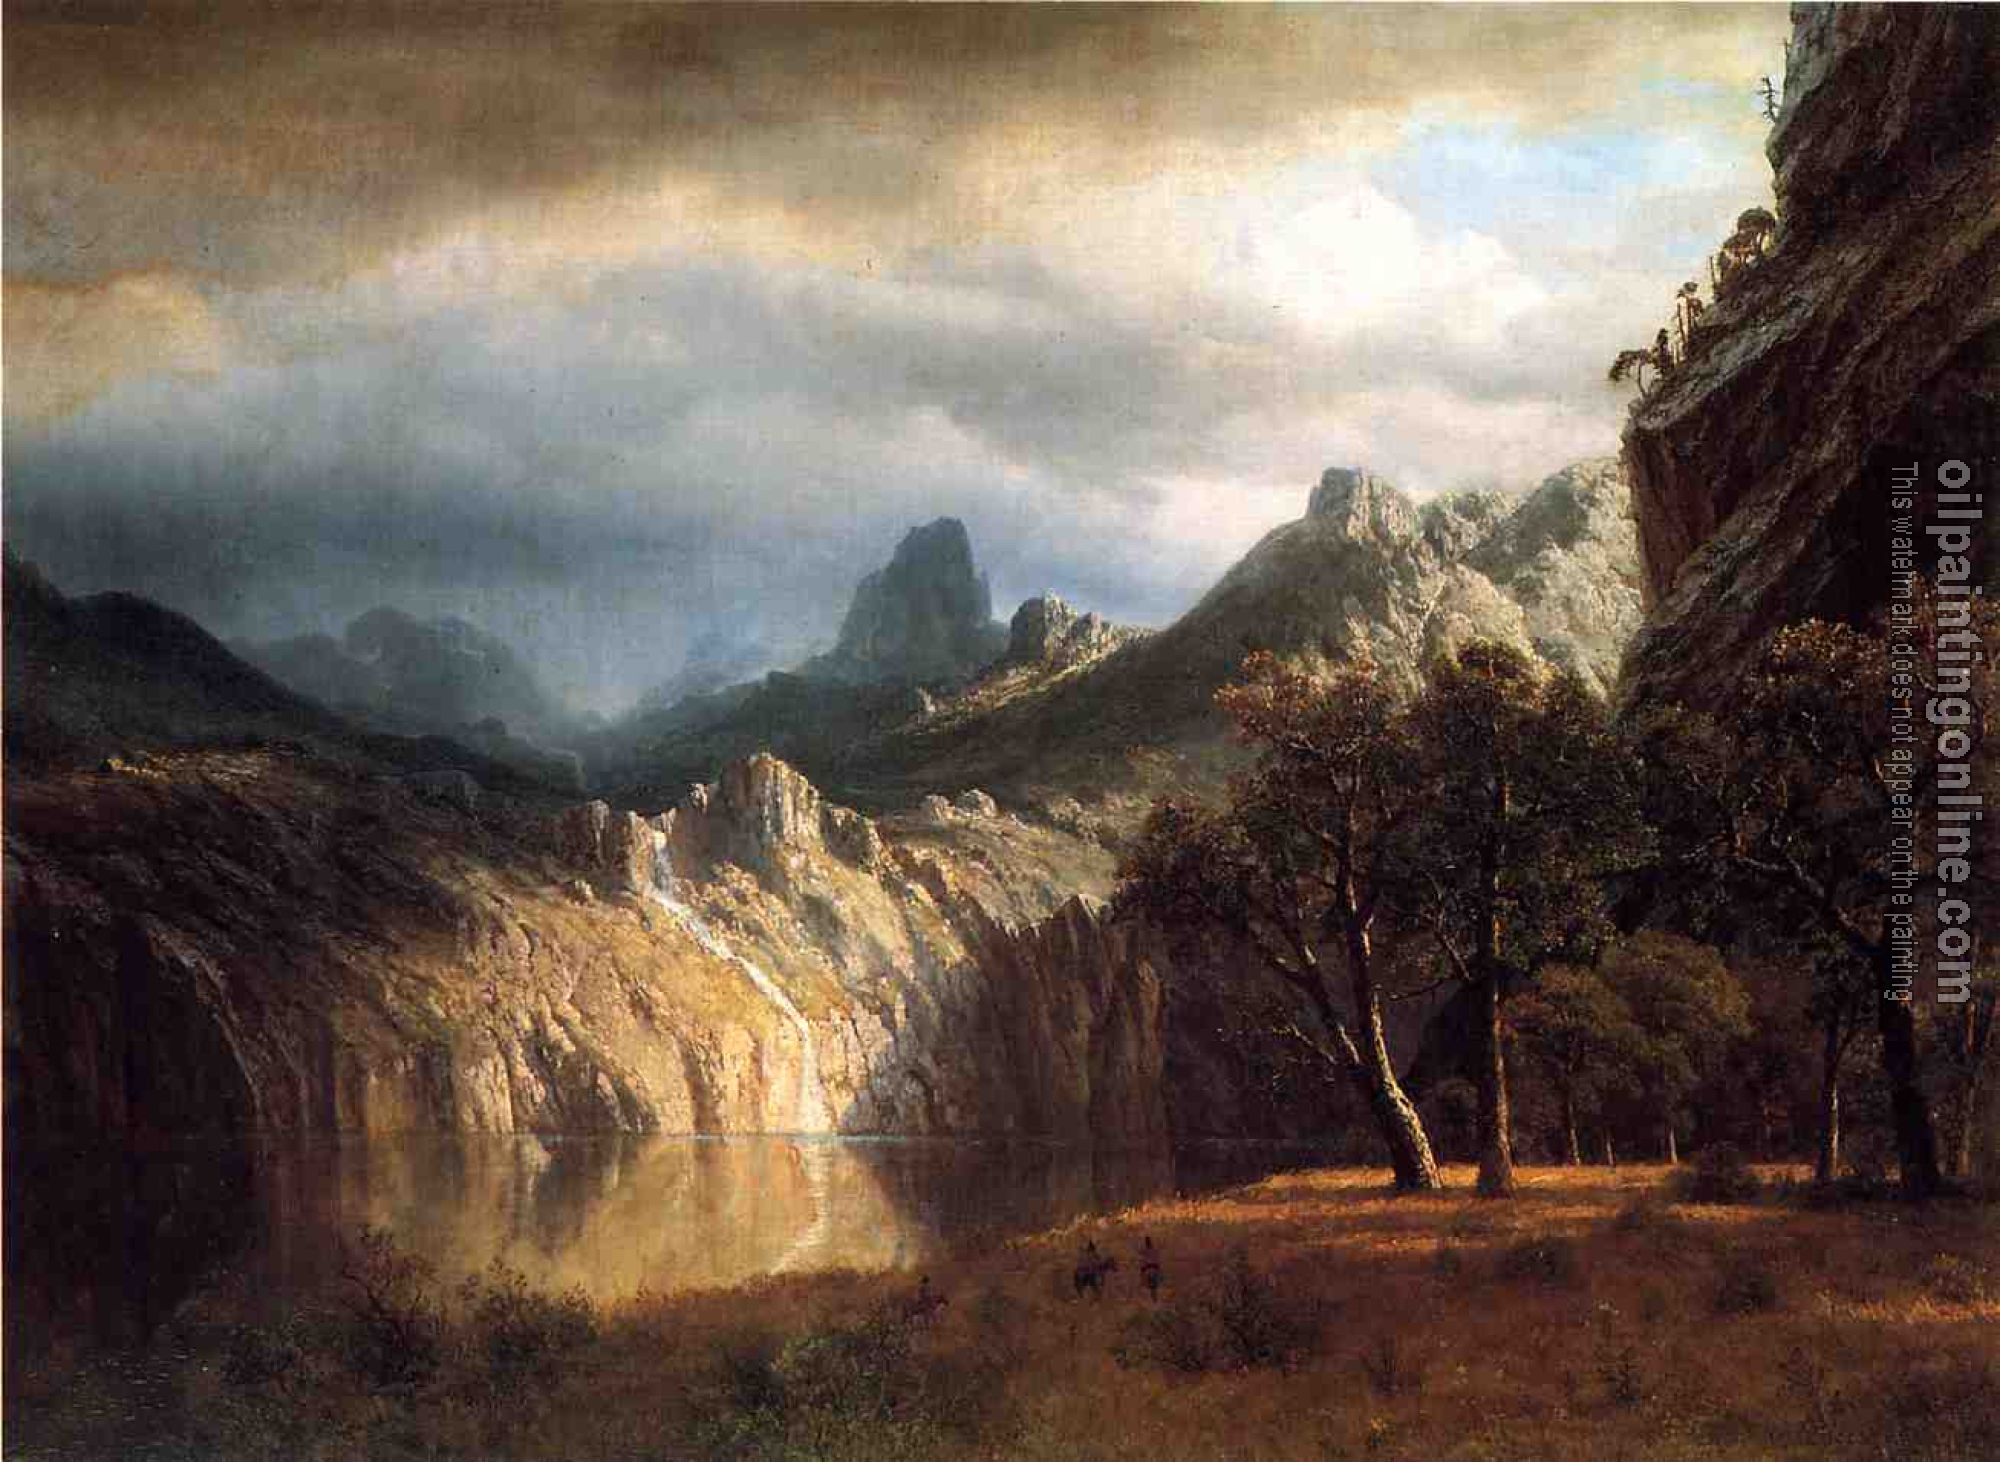 Bierstadt, Albert - In Western Mountains